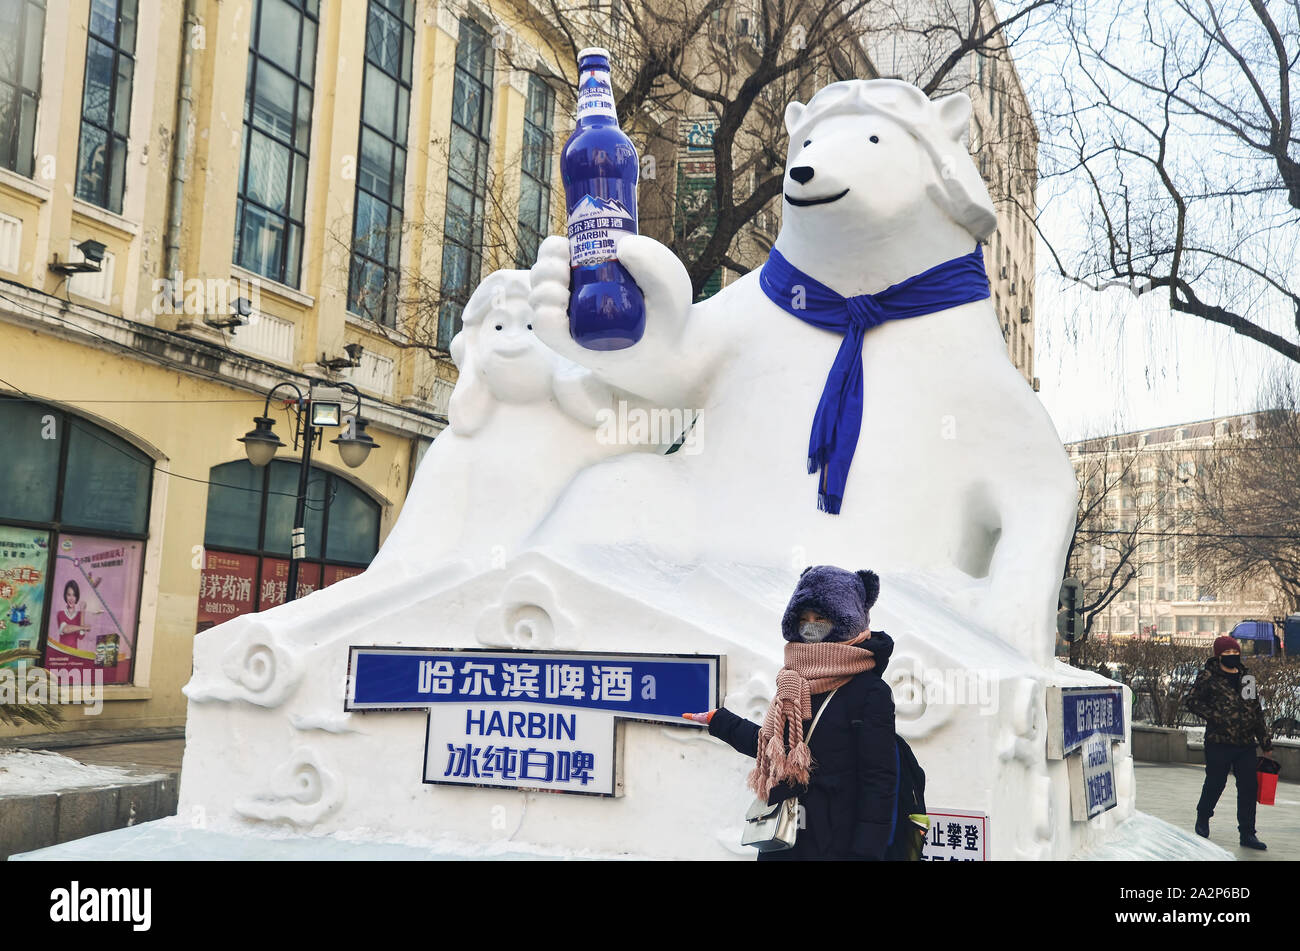 Polar bear snow sculpture by Harbin Brewery in Zhongyang Dajie (Central Street) Harbin Stock Photo